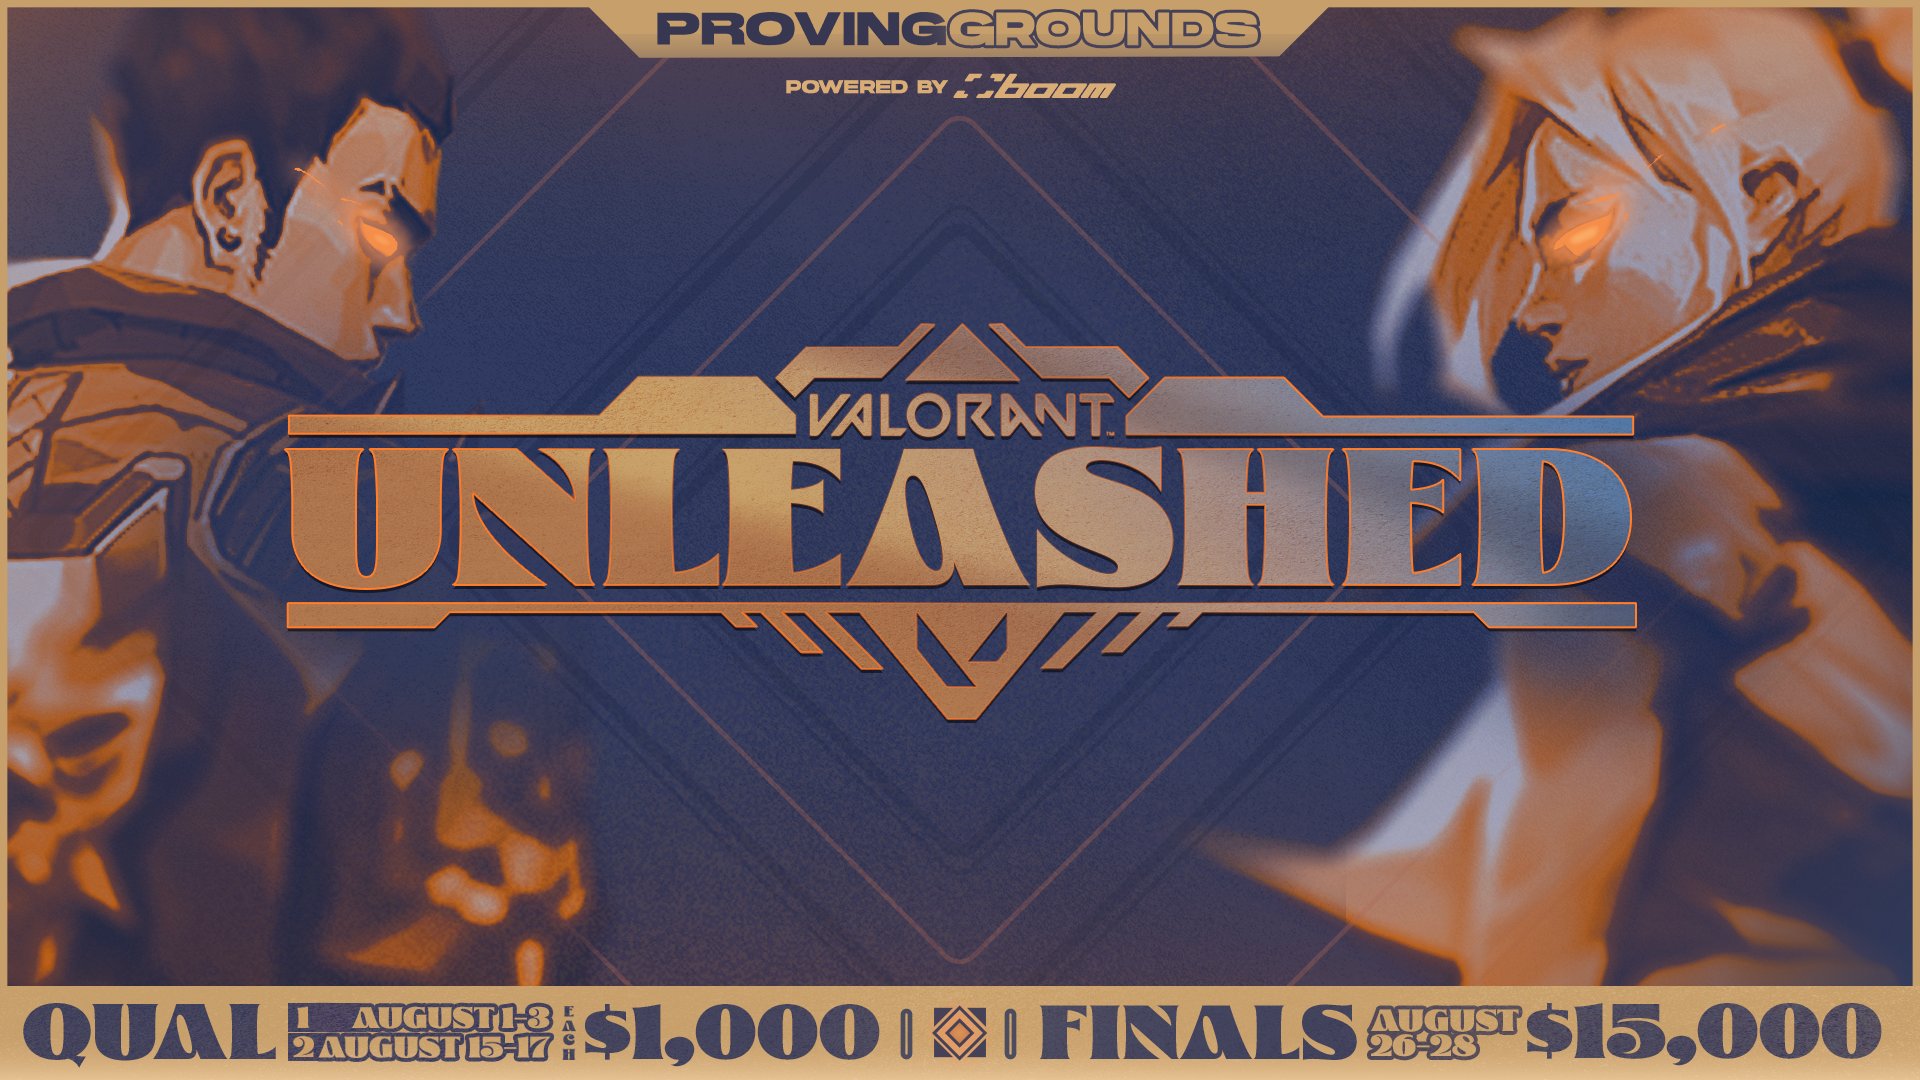 Valorant Unleashed tournament